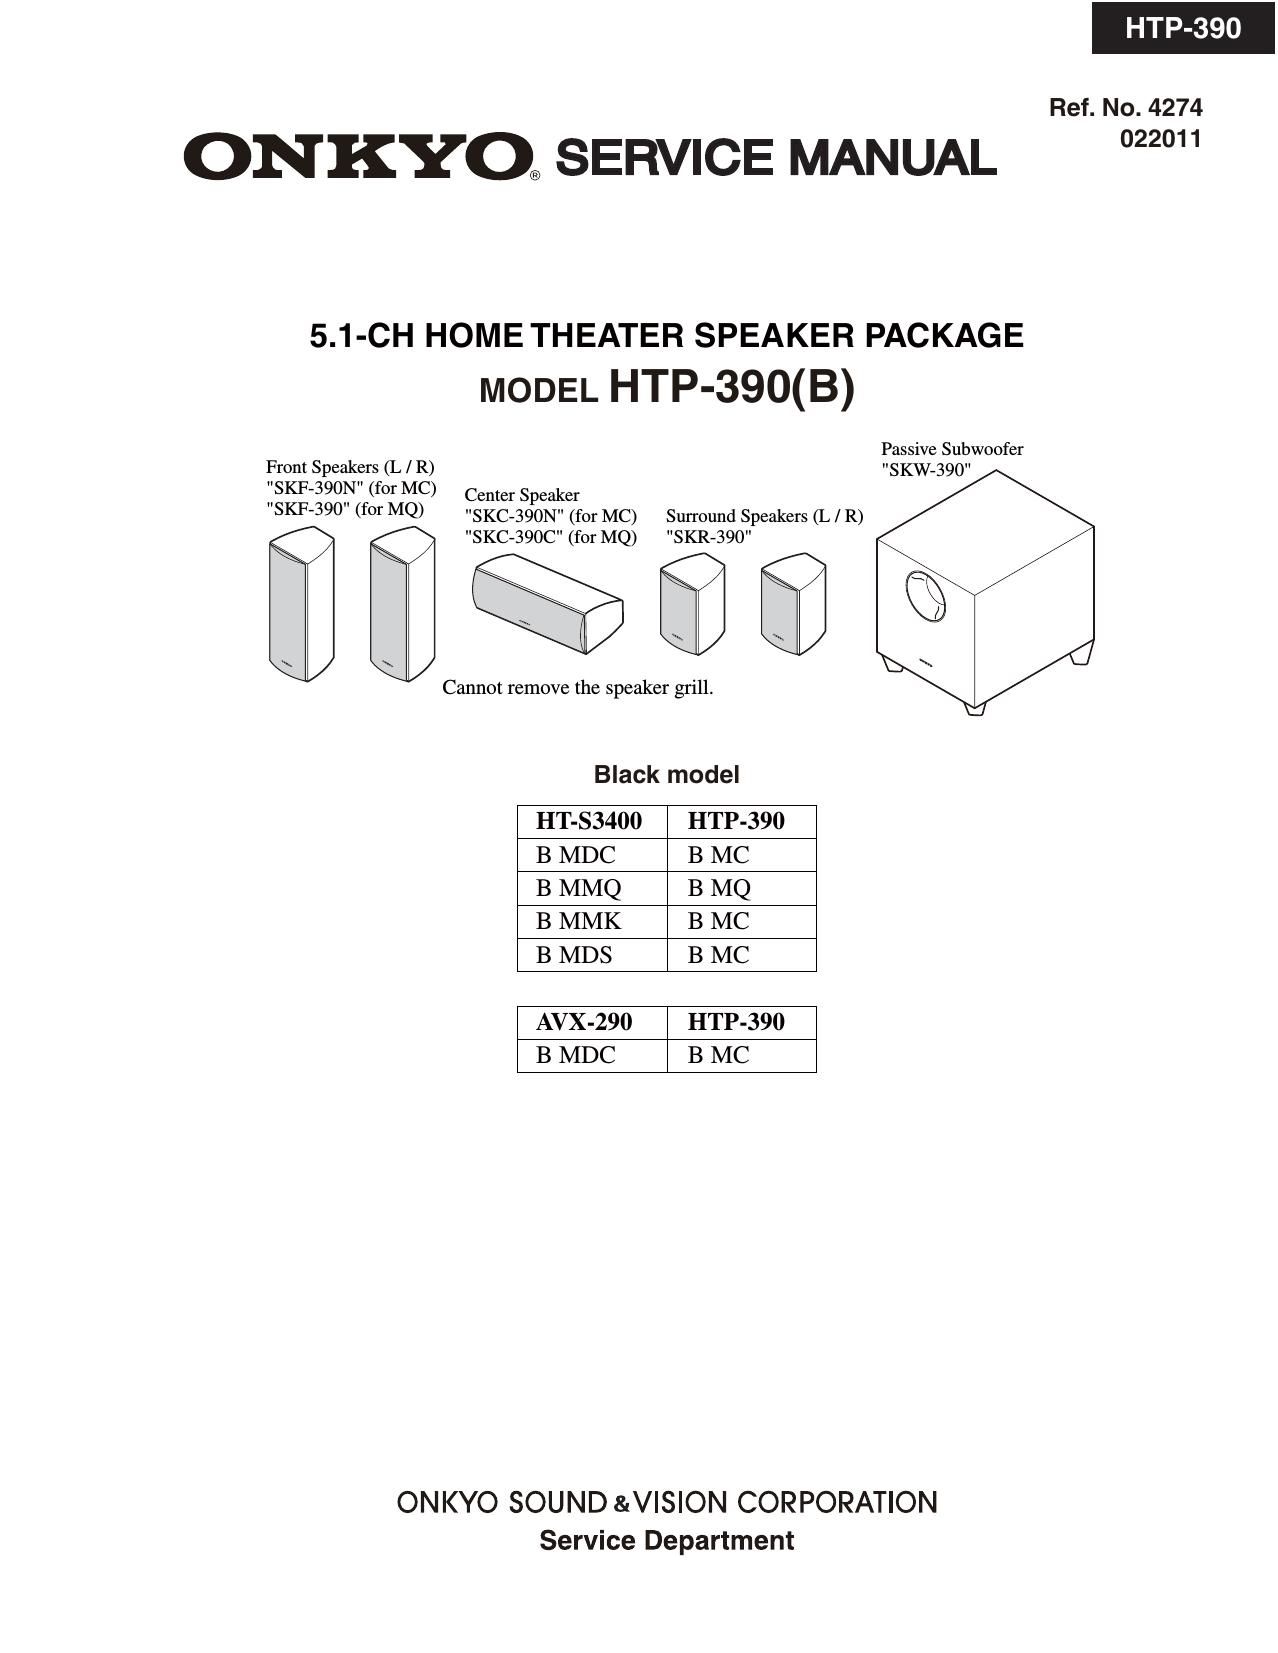 Onkyo HTP 390 Service Manual